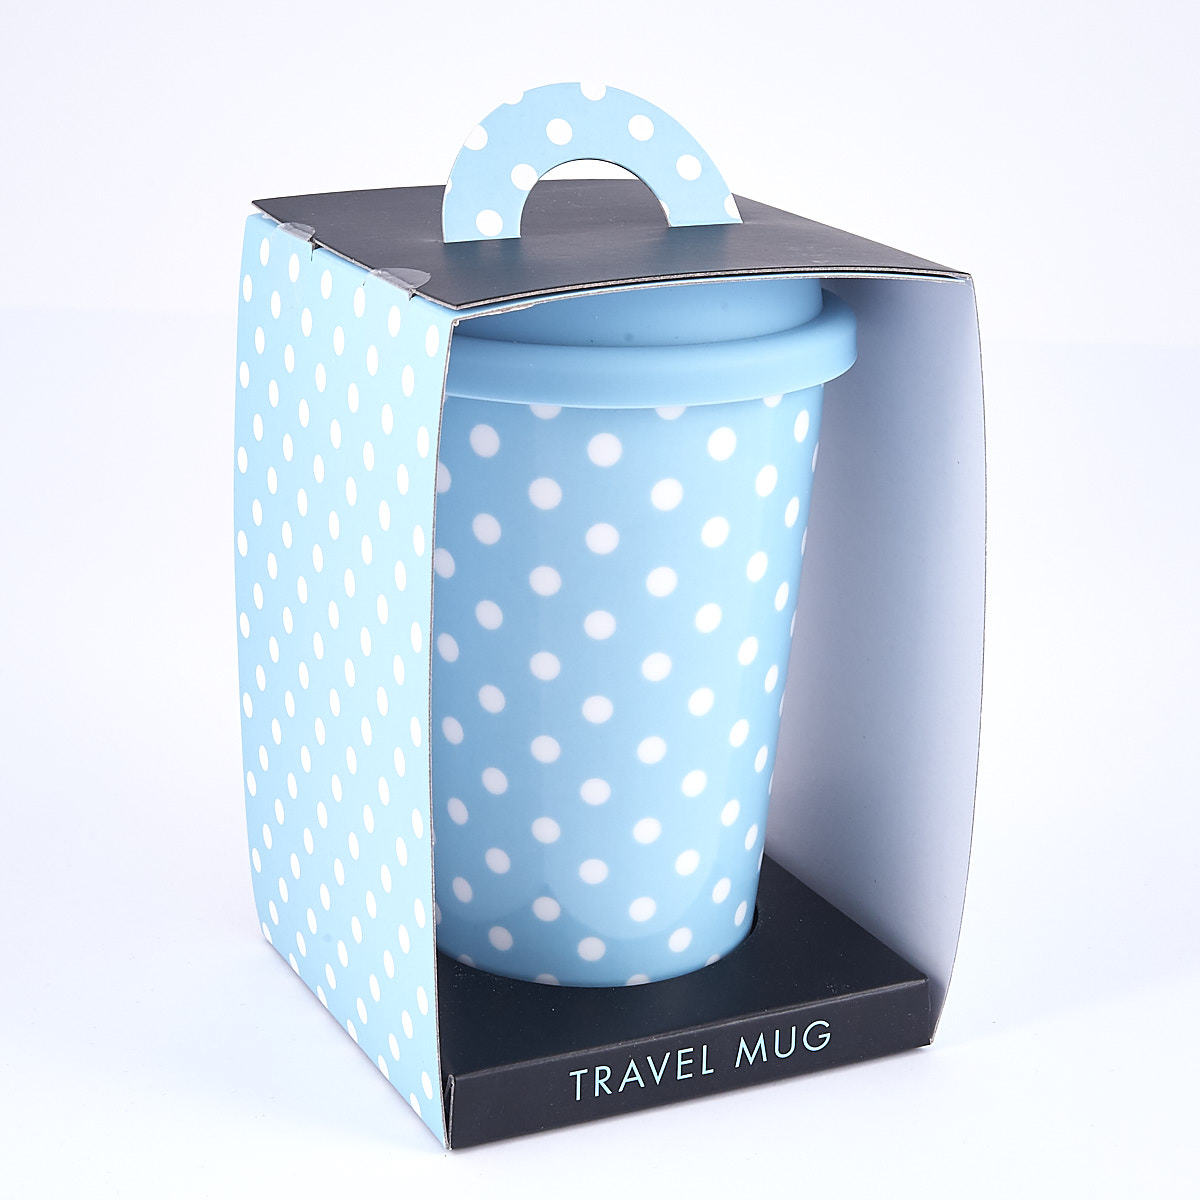 Blue Travel Mug with White Polka Dots